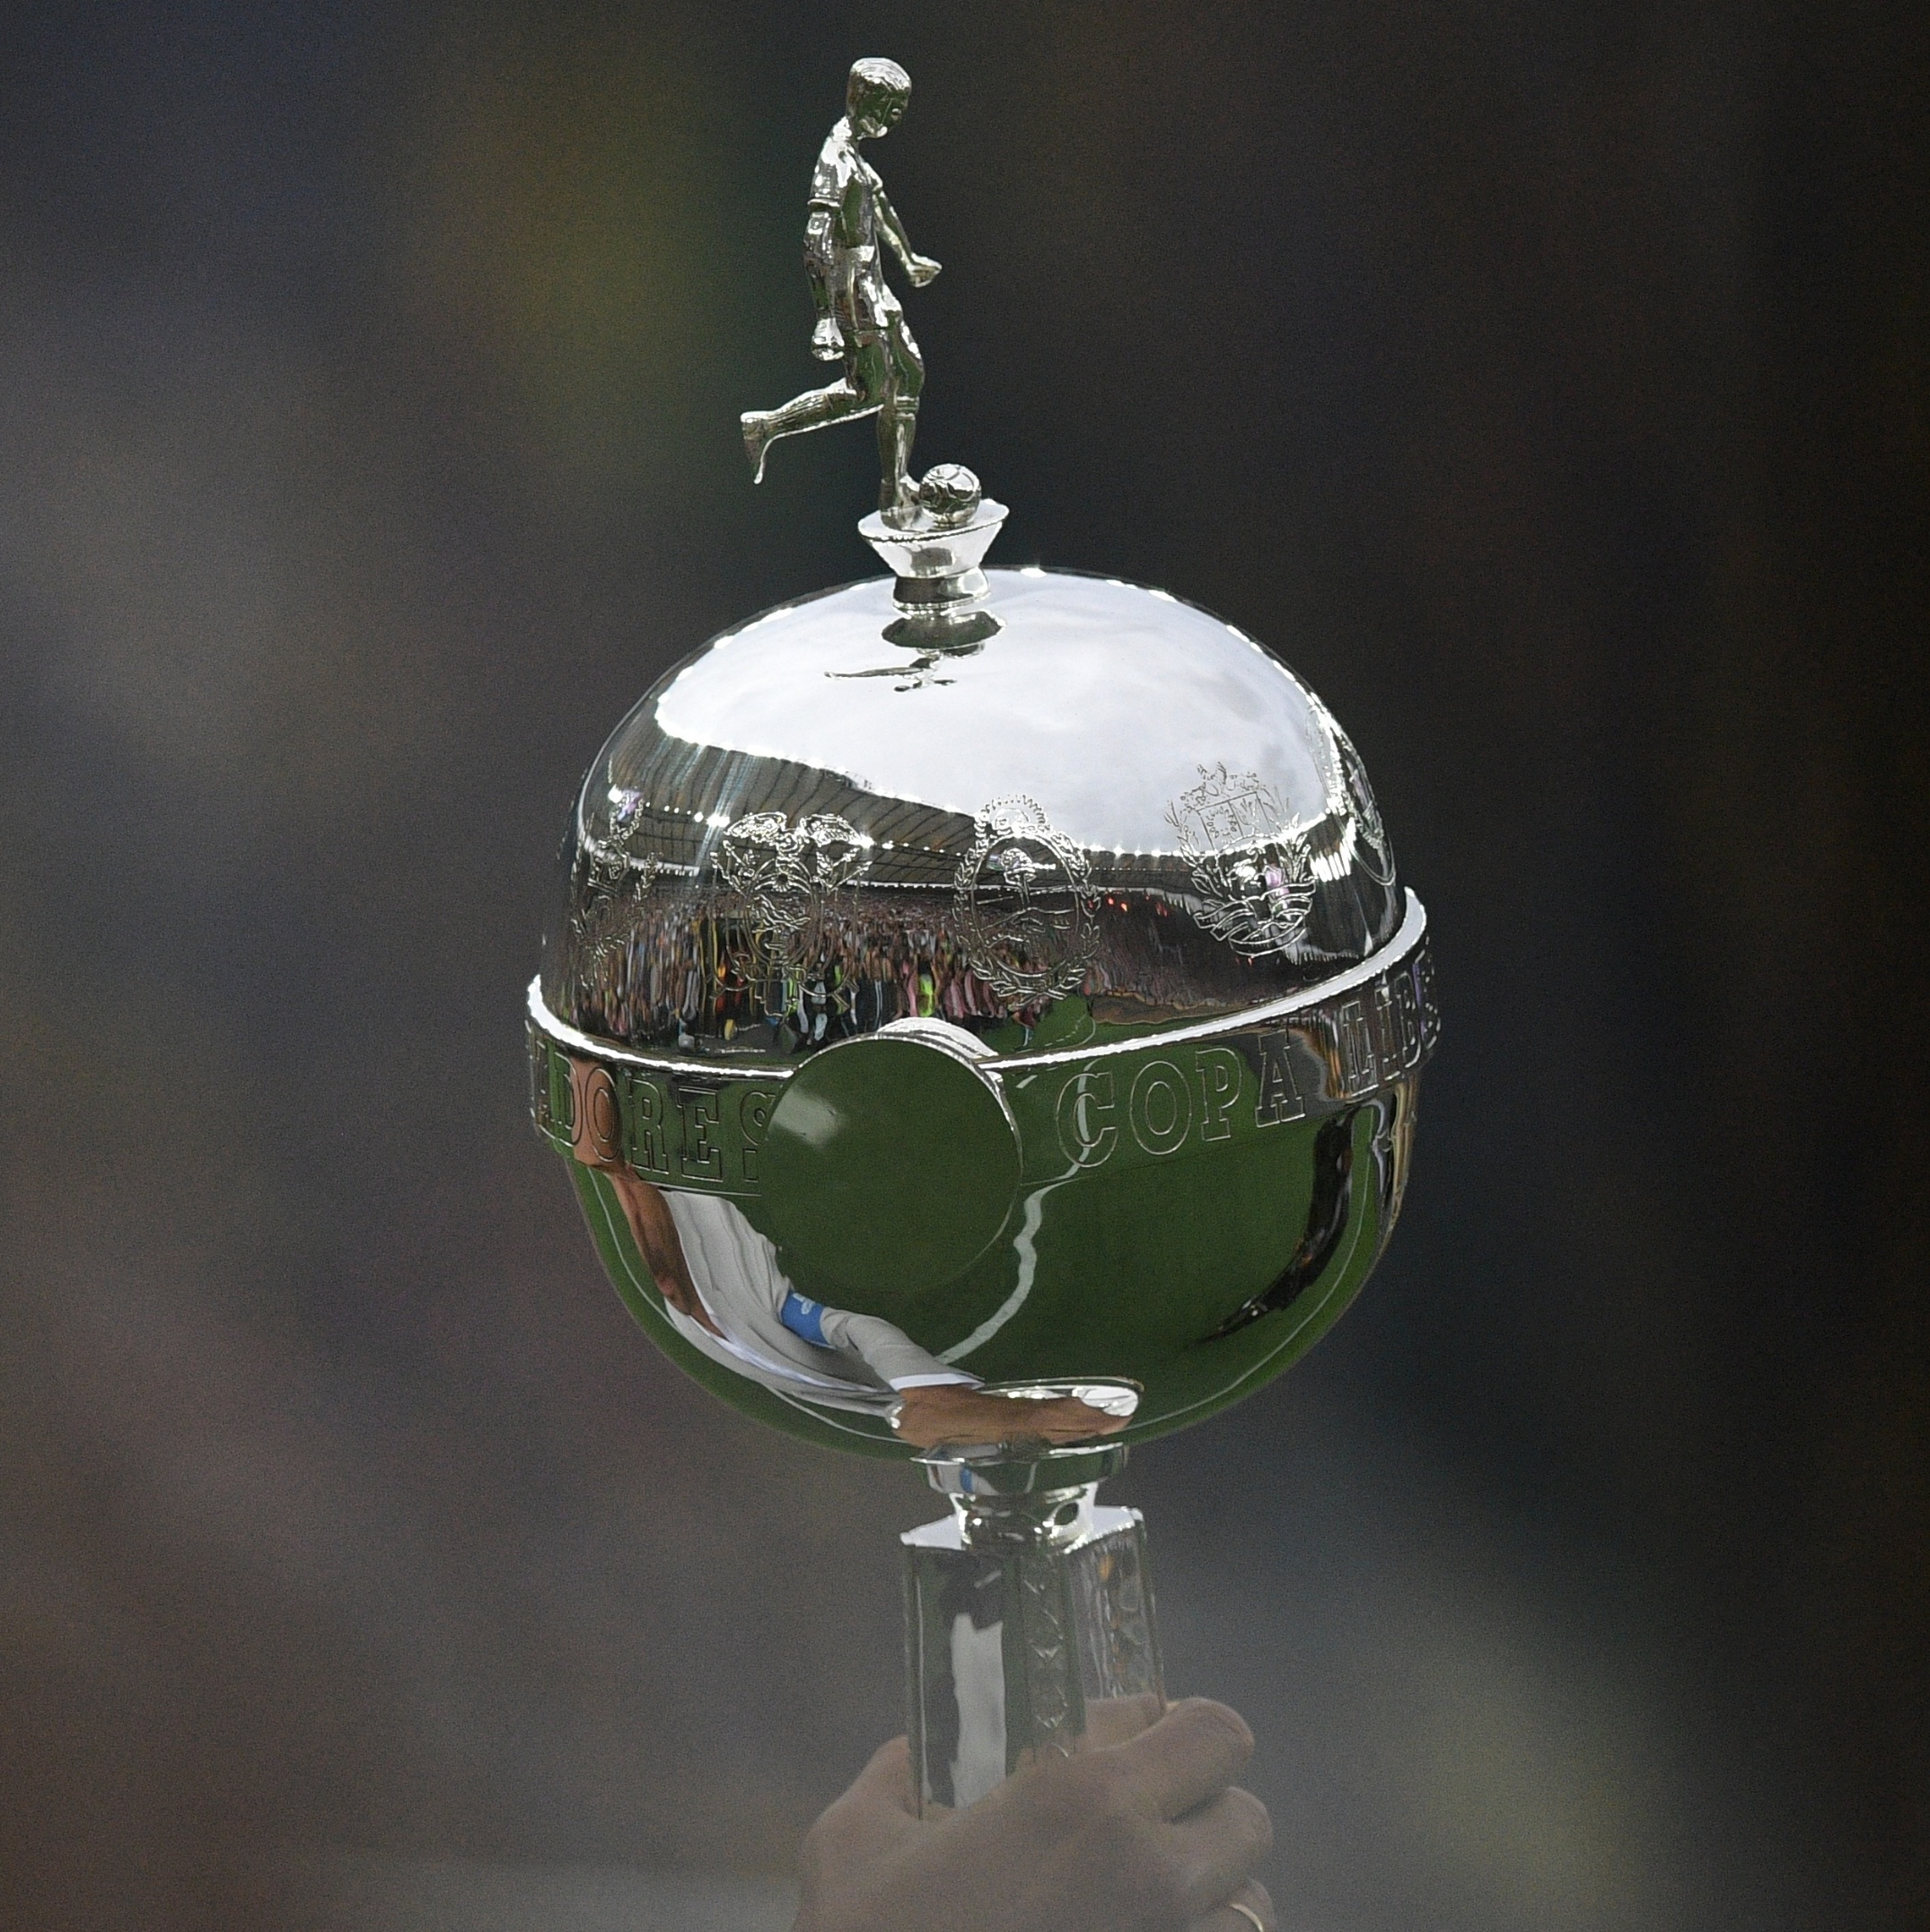 GRANDE FINAL – Copa Libertadores do Tênis Clube 2023 – Tenis Clube